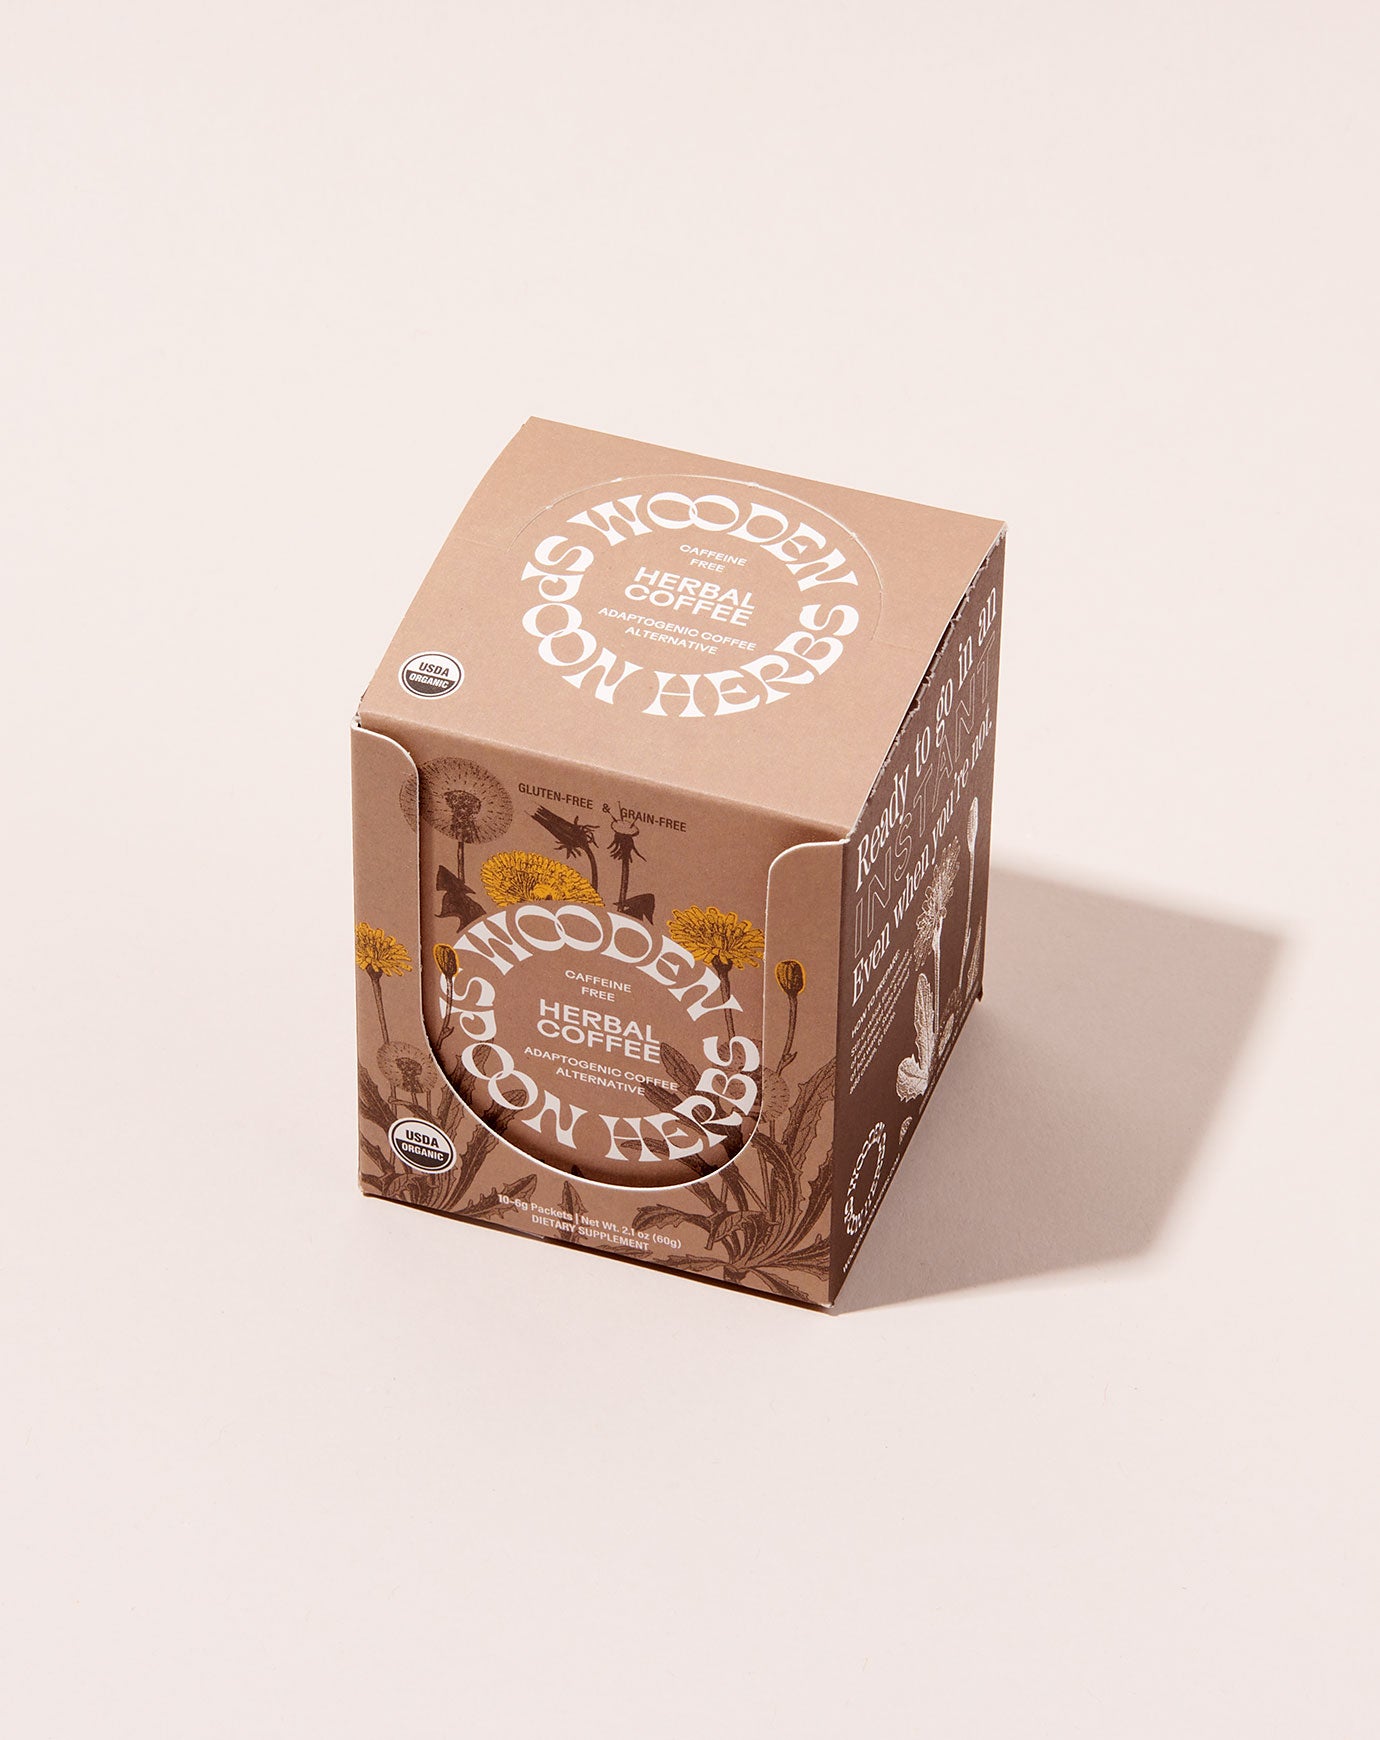 Wooden Spoon Herbs Herbal Coffee Sachet Box